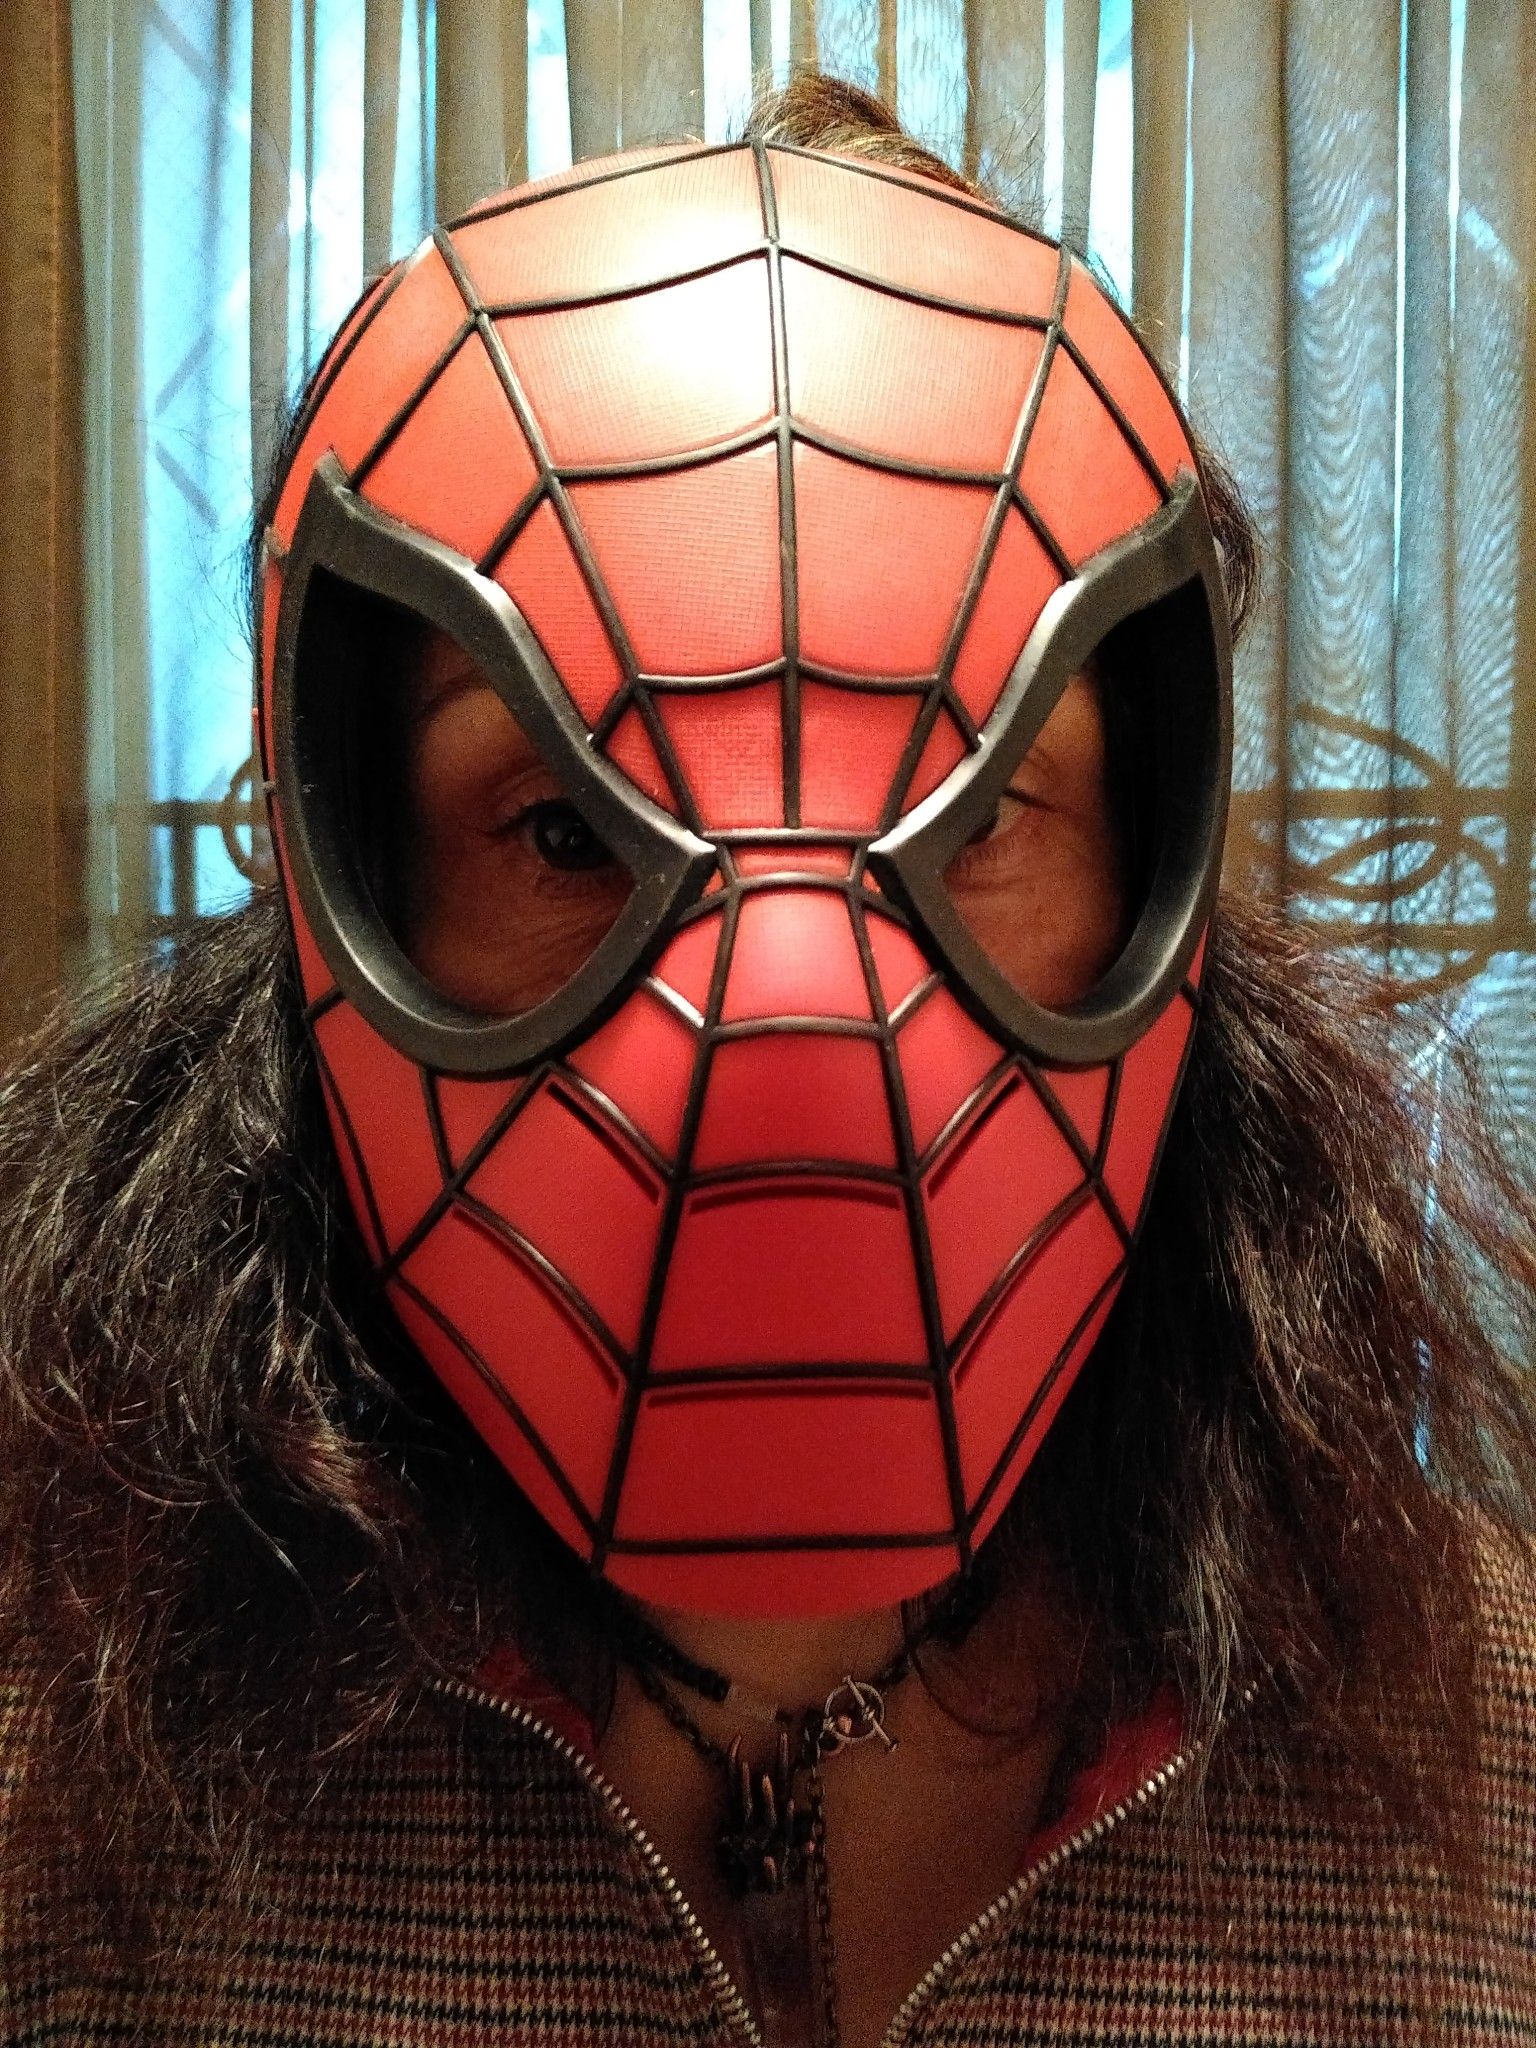 Halloween, Spiderman Mask Made of Durable Plastic. Halloween Costume.